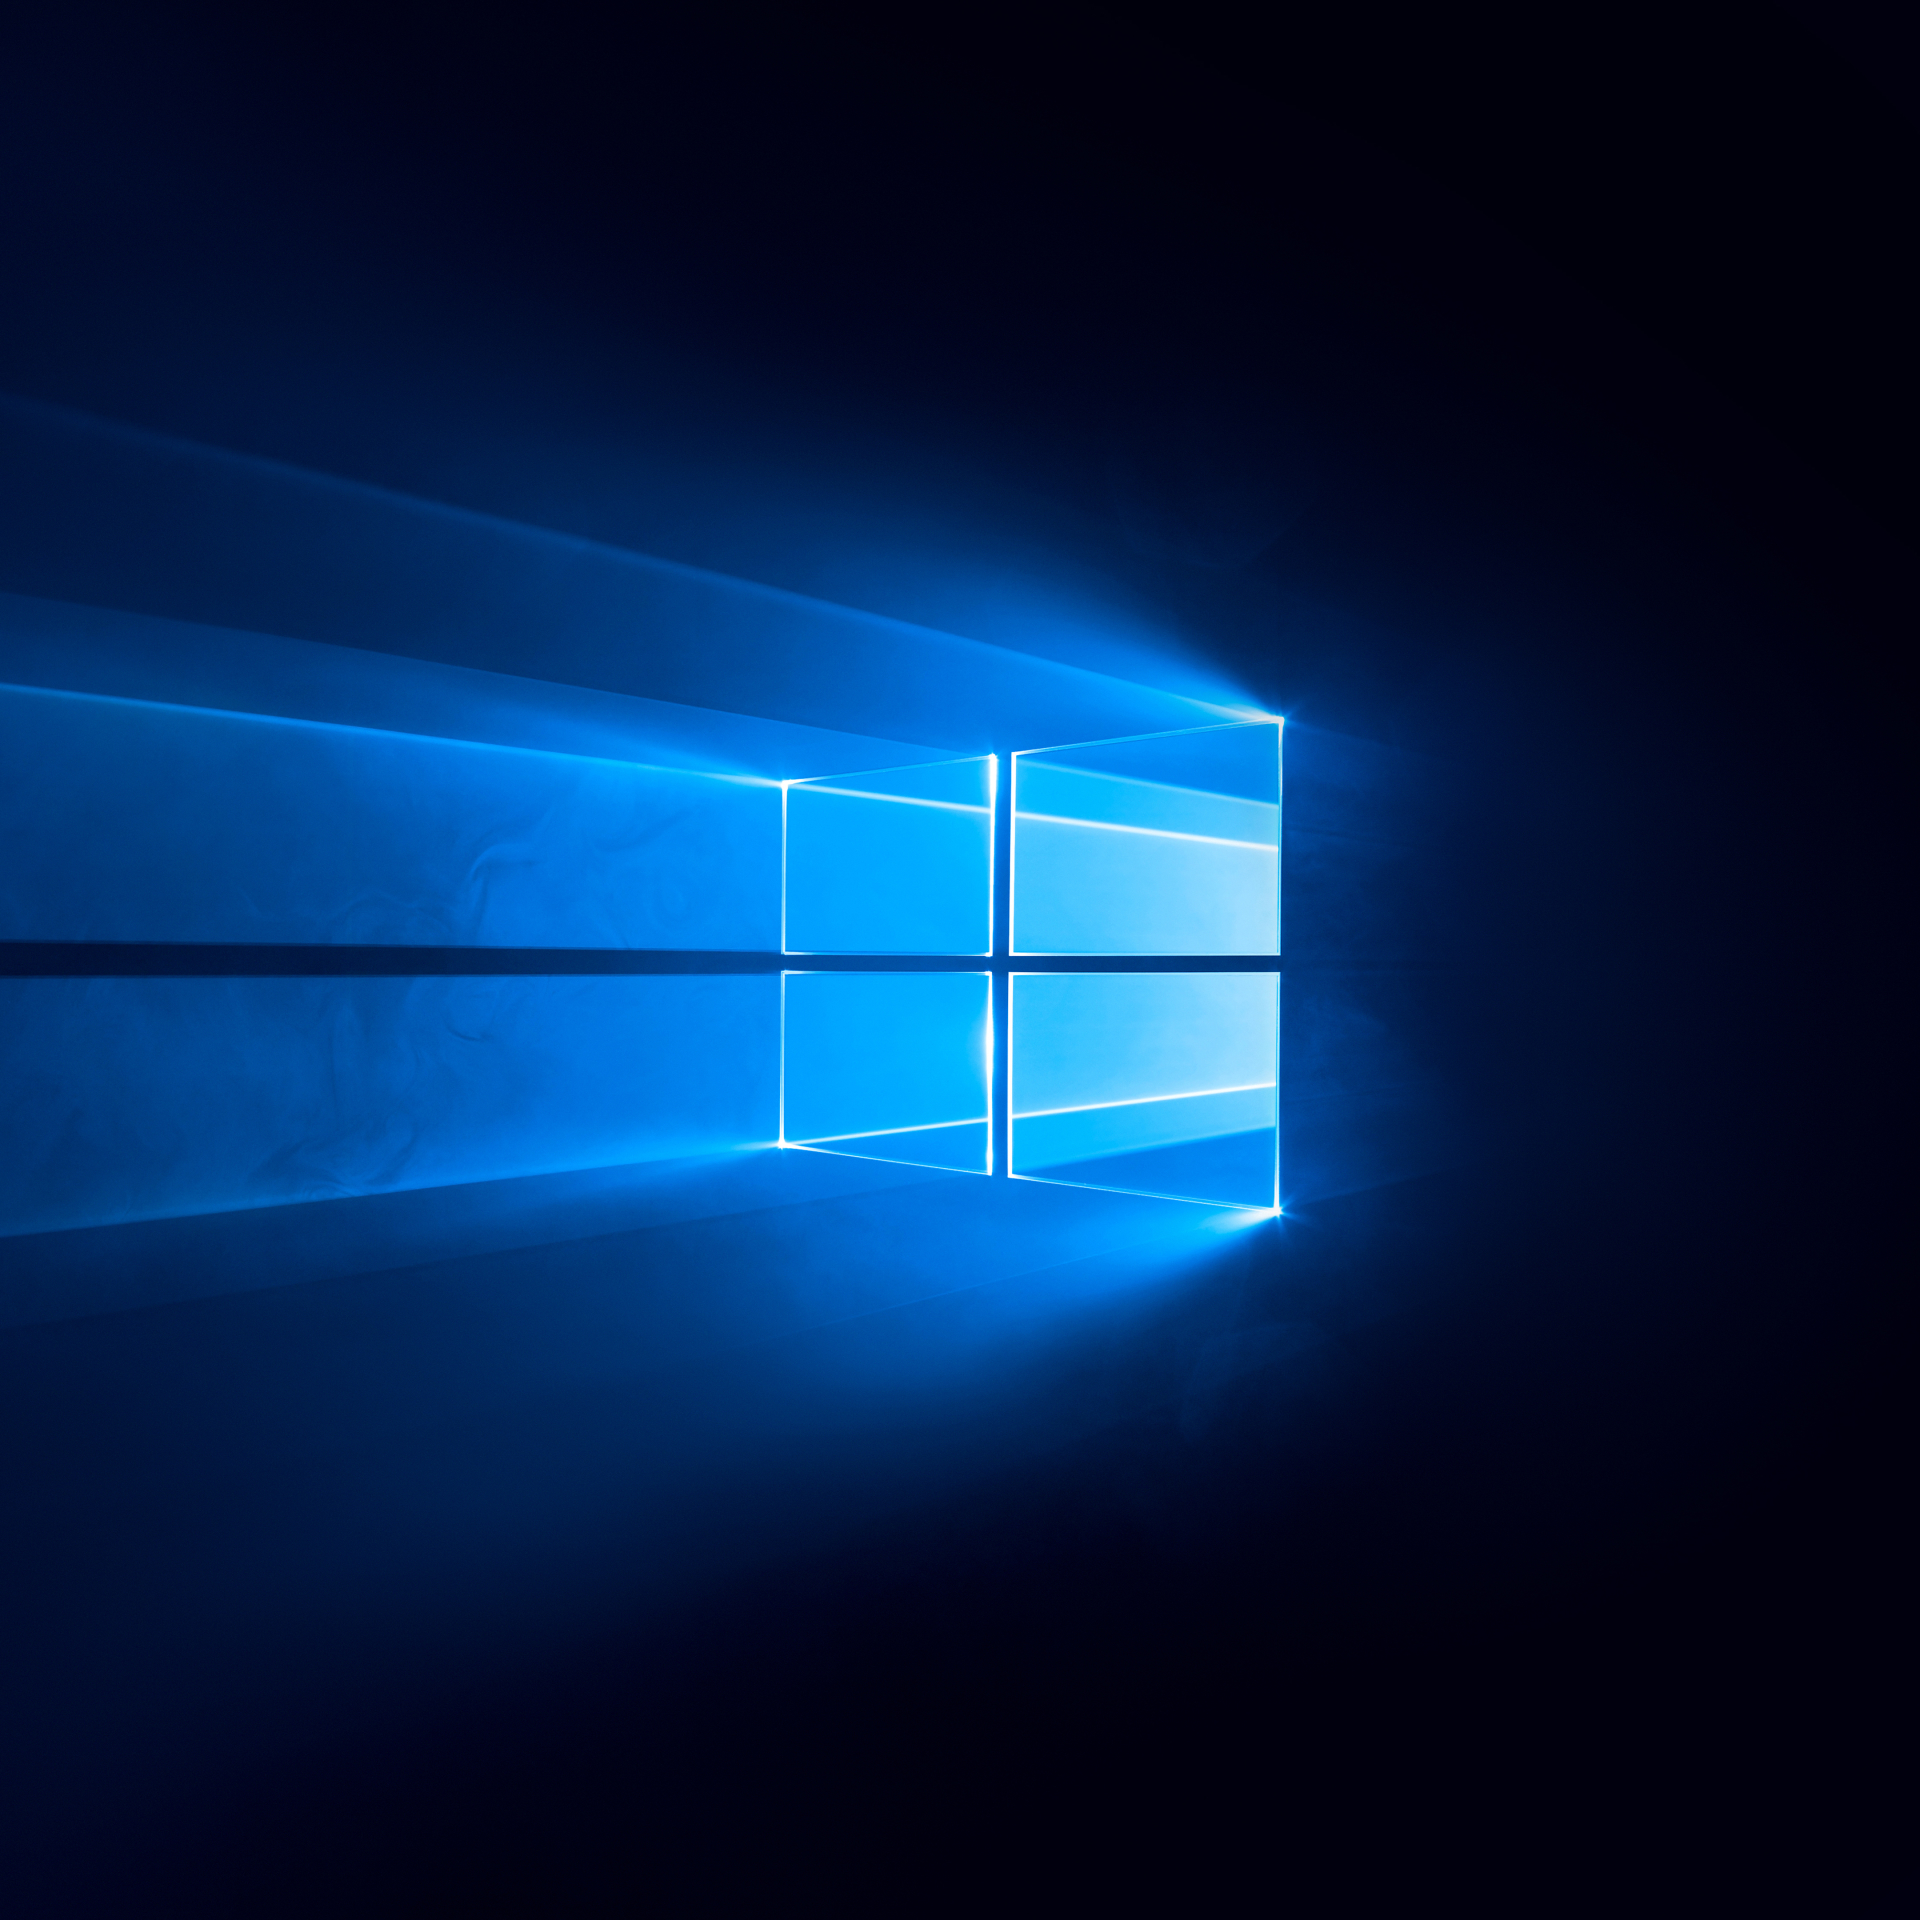 Windows 10 Pfp by Meritt Thomas